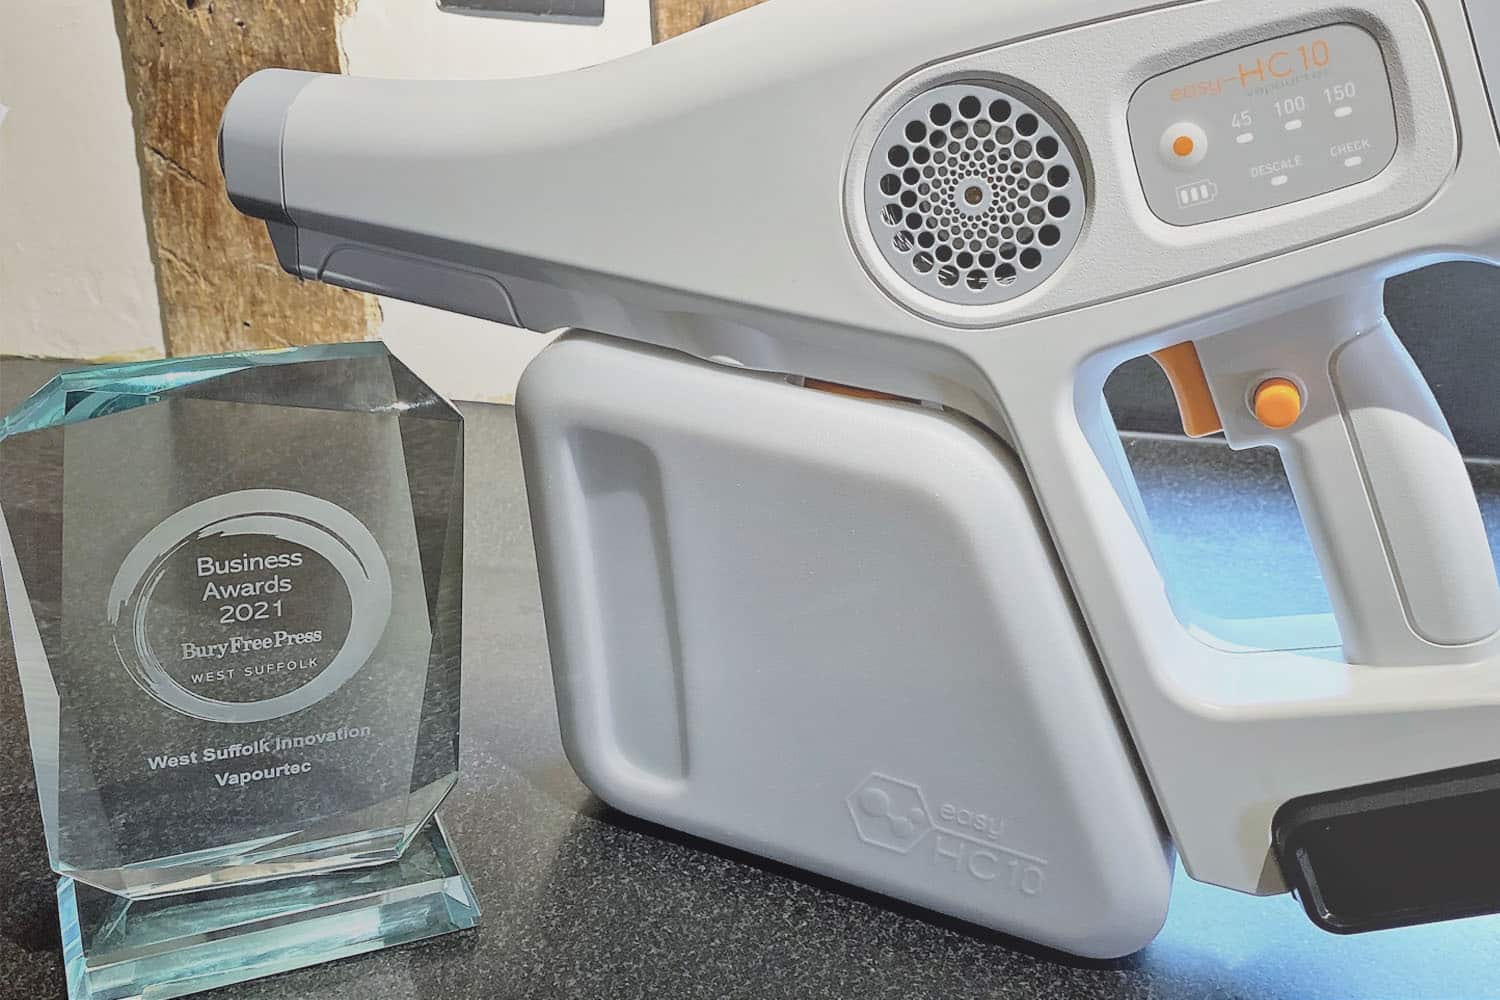 Covid Disinfection Sprayer Wins Award